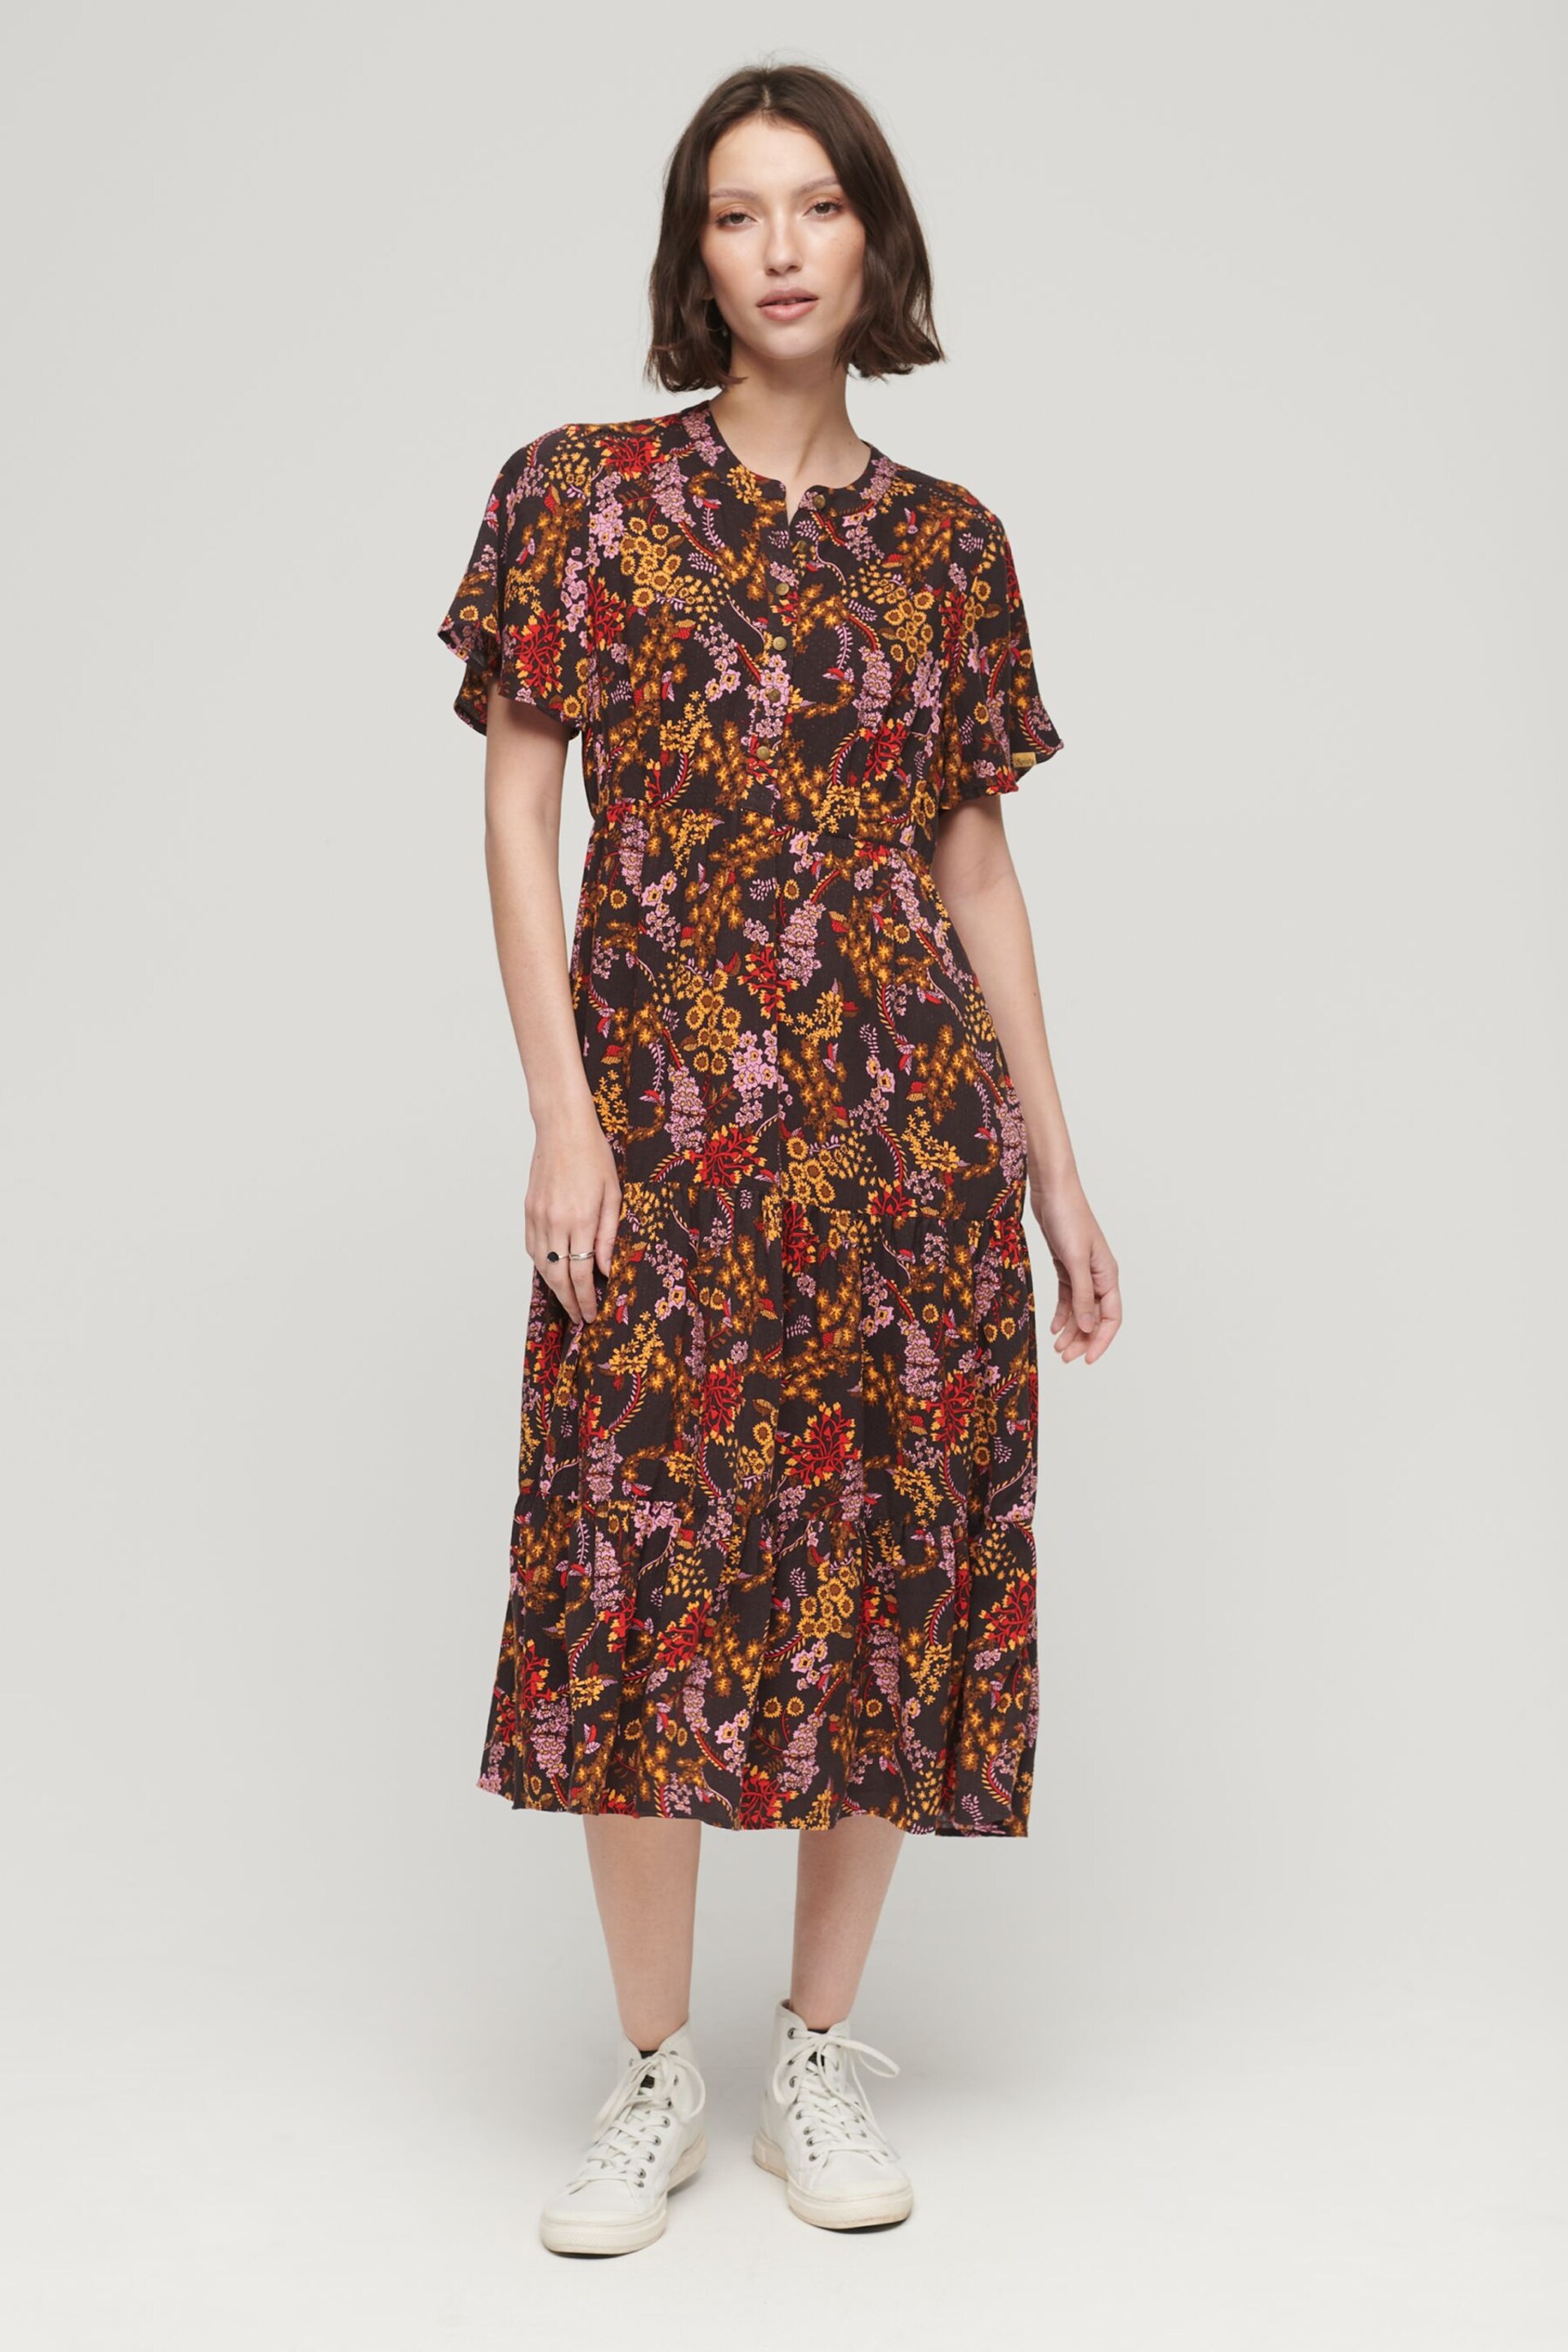 Superdry Brown Printed Tiered Midi Dress - Image 1 of 6